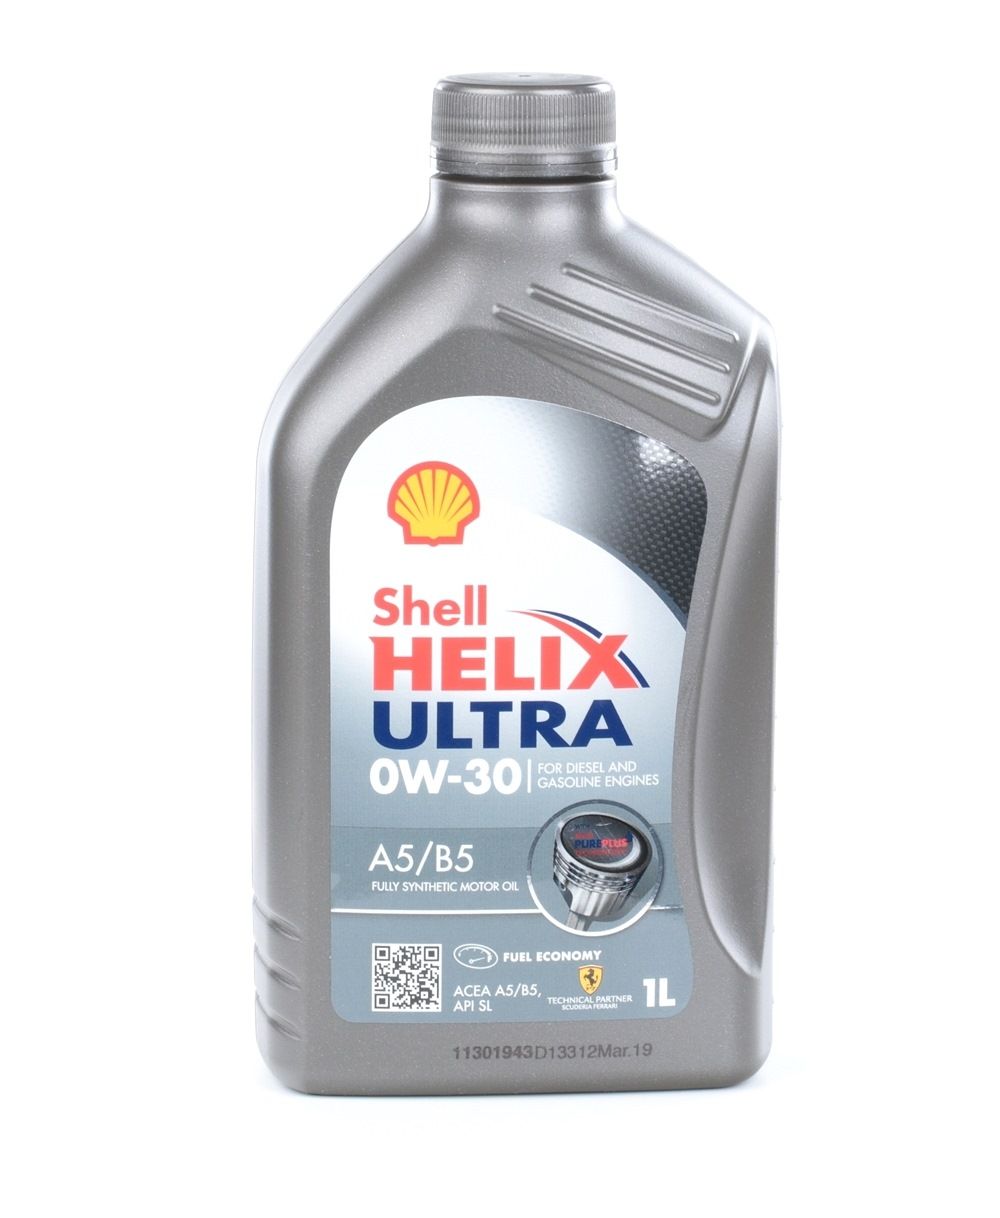 SHELL Motoröl FIAT,PEUGEOT,HYUNDAI 550046659 201510101210 Motorenöl,Öl,Öl für Motor von SHELL